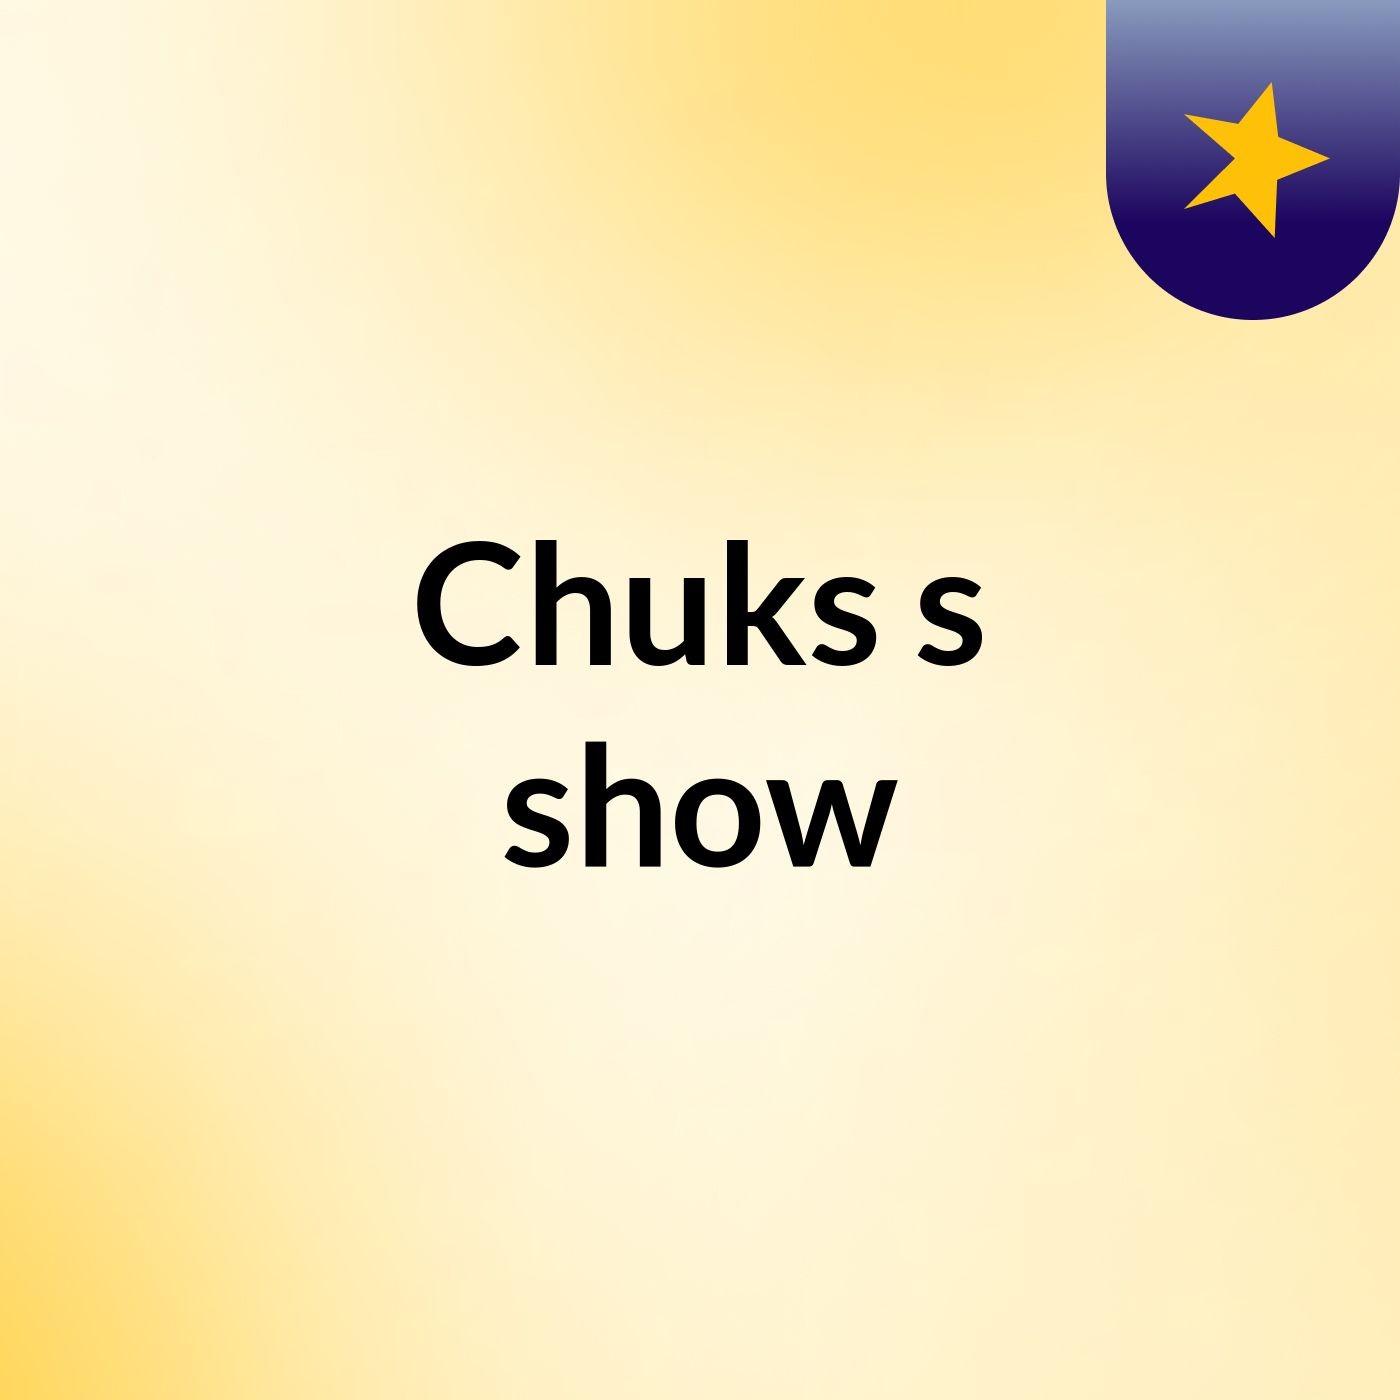 Chuks's show